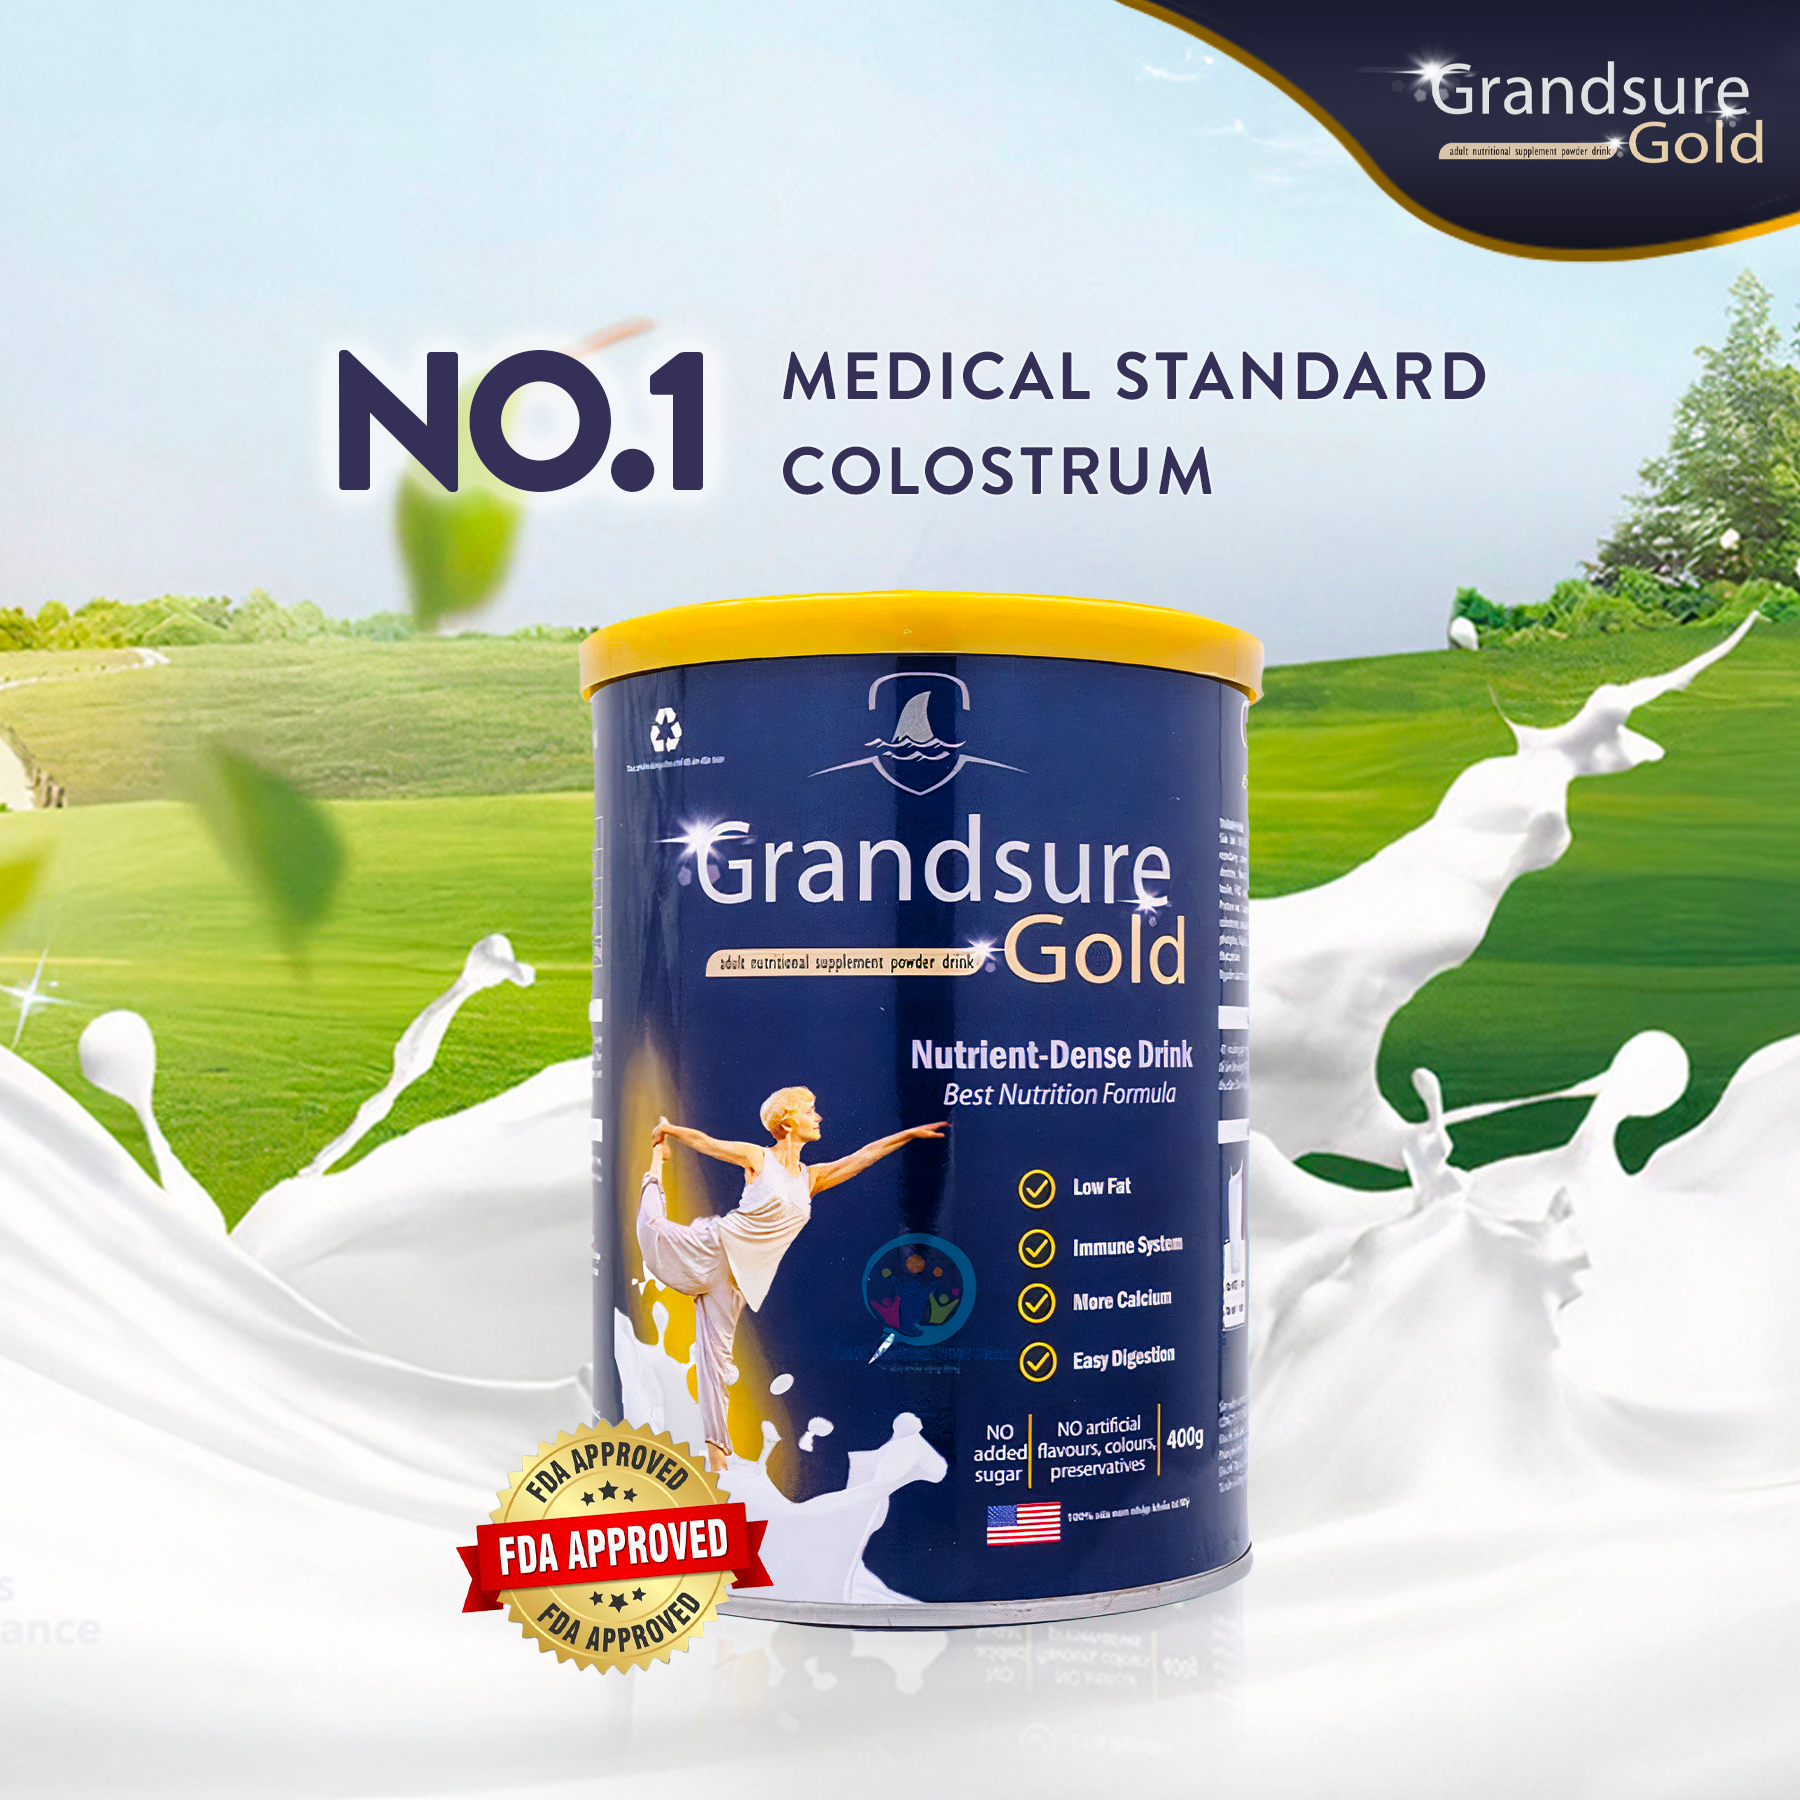 No.1 Medical Standard Colostrum